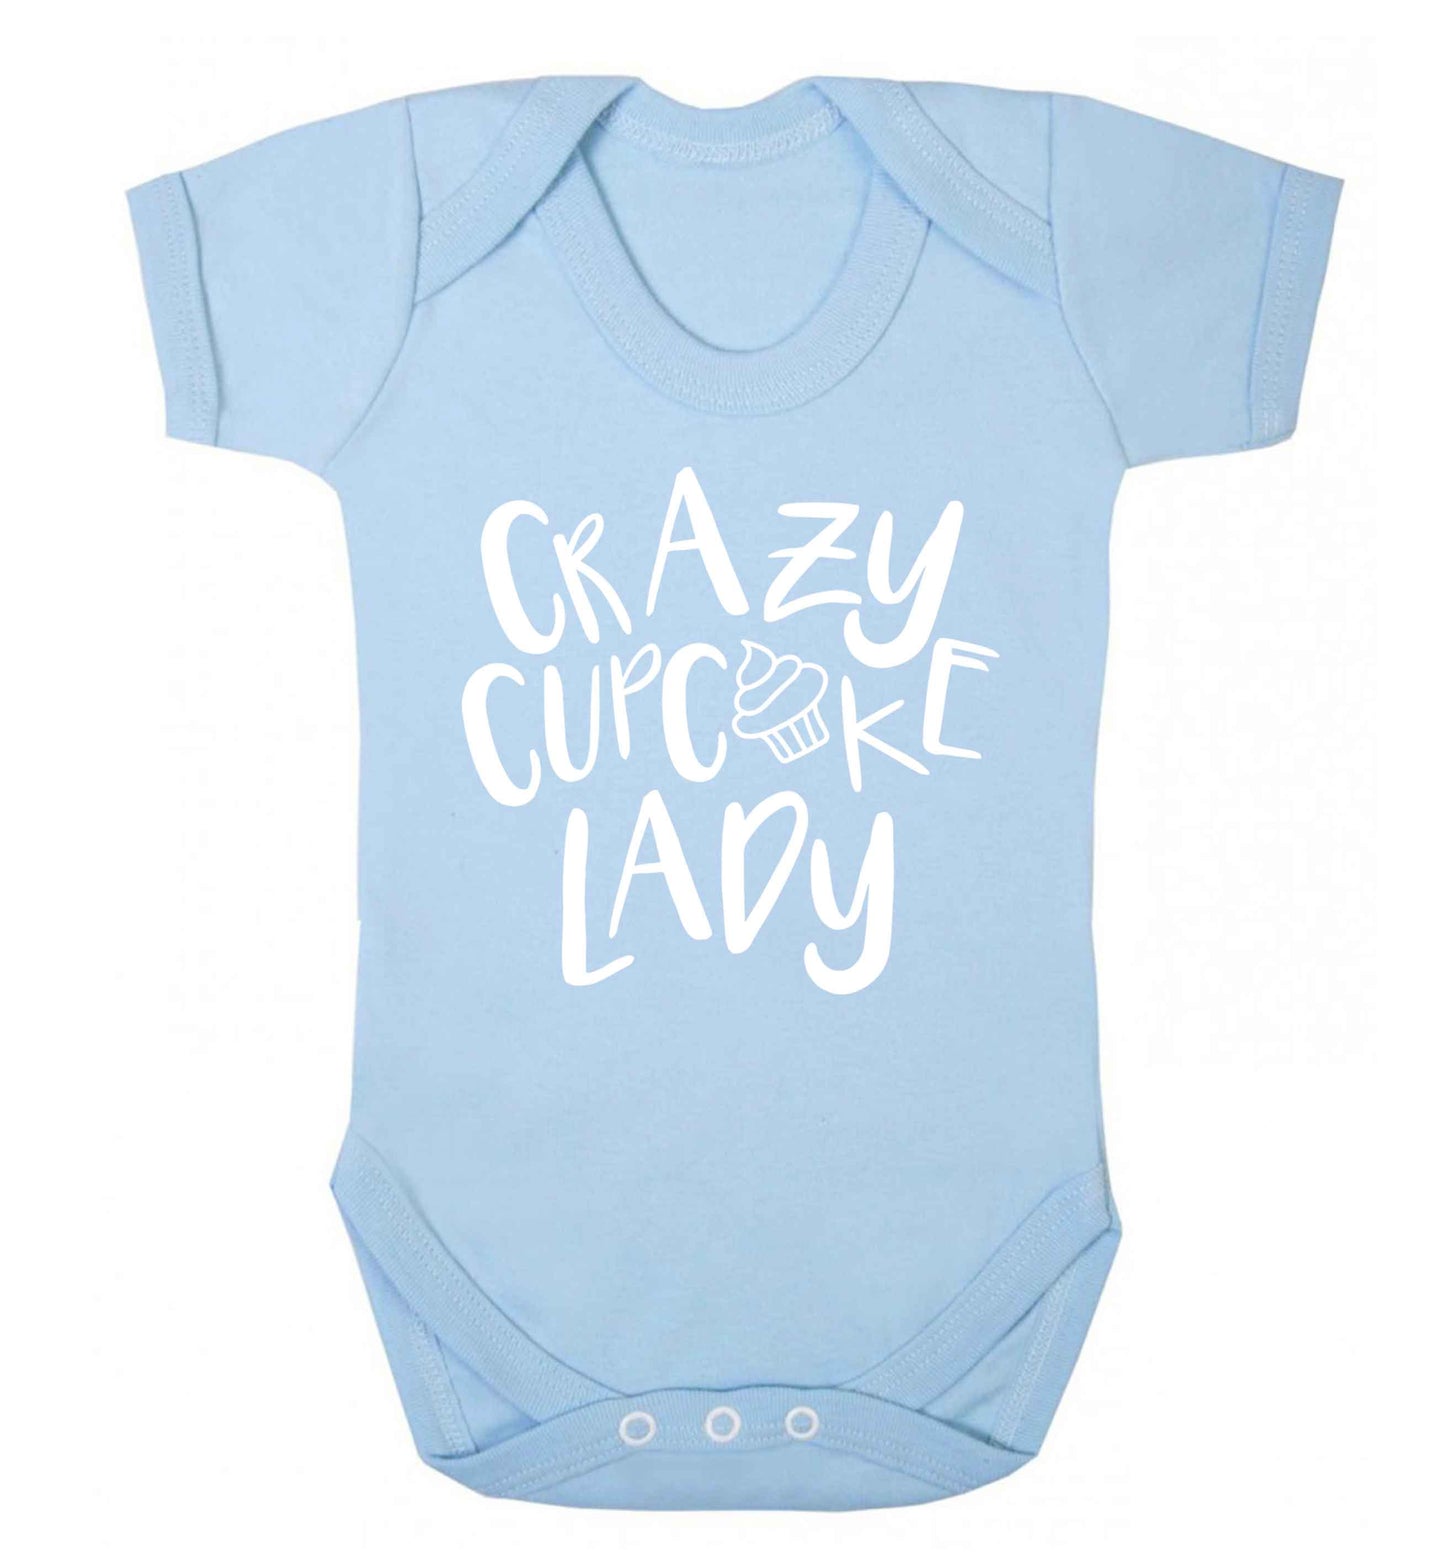 Crazy cupcake lady Baby Vest pale blue 18-24 months